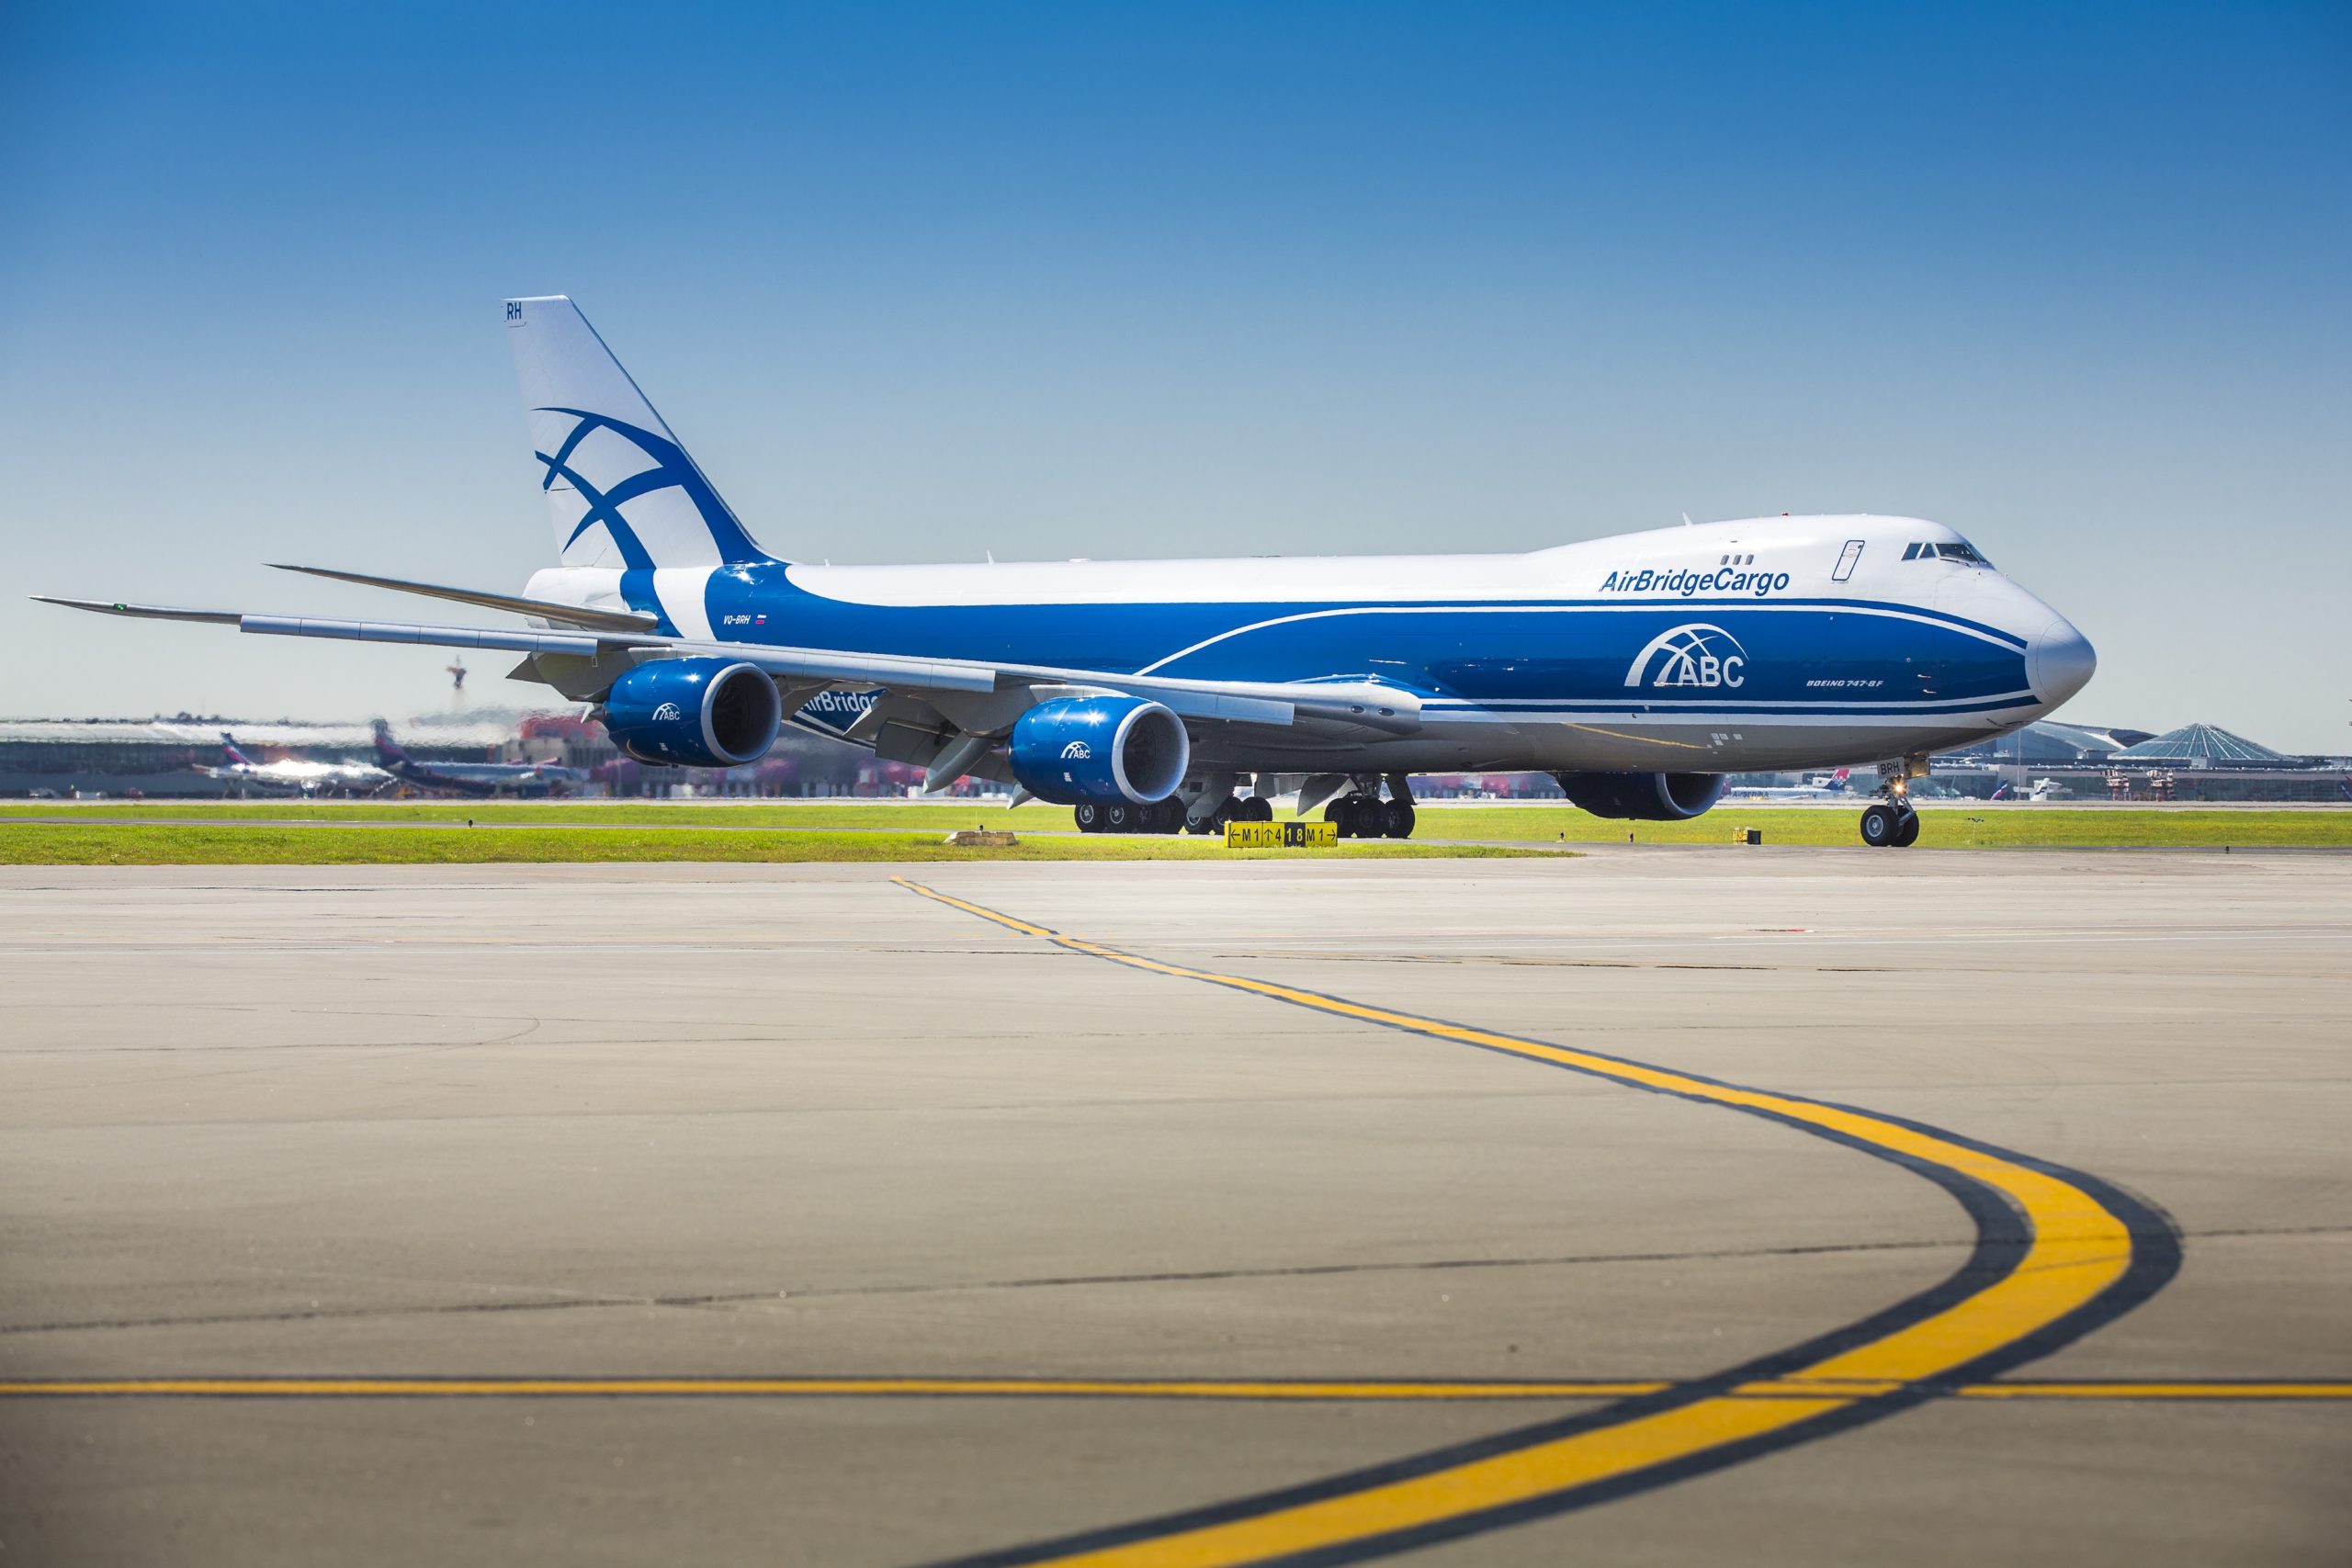 Update: AirBridgeCargo 747-8F confirmed repossessed following court order